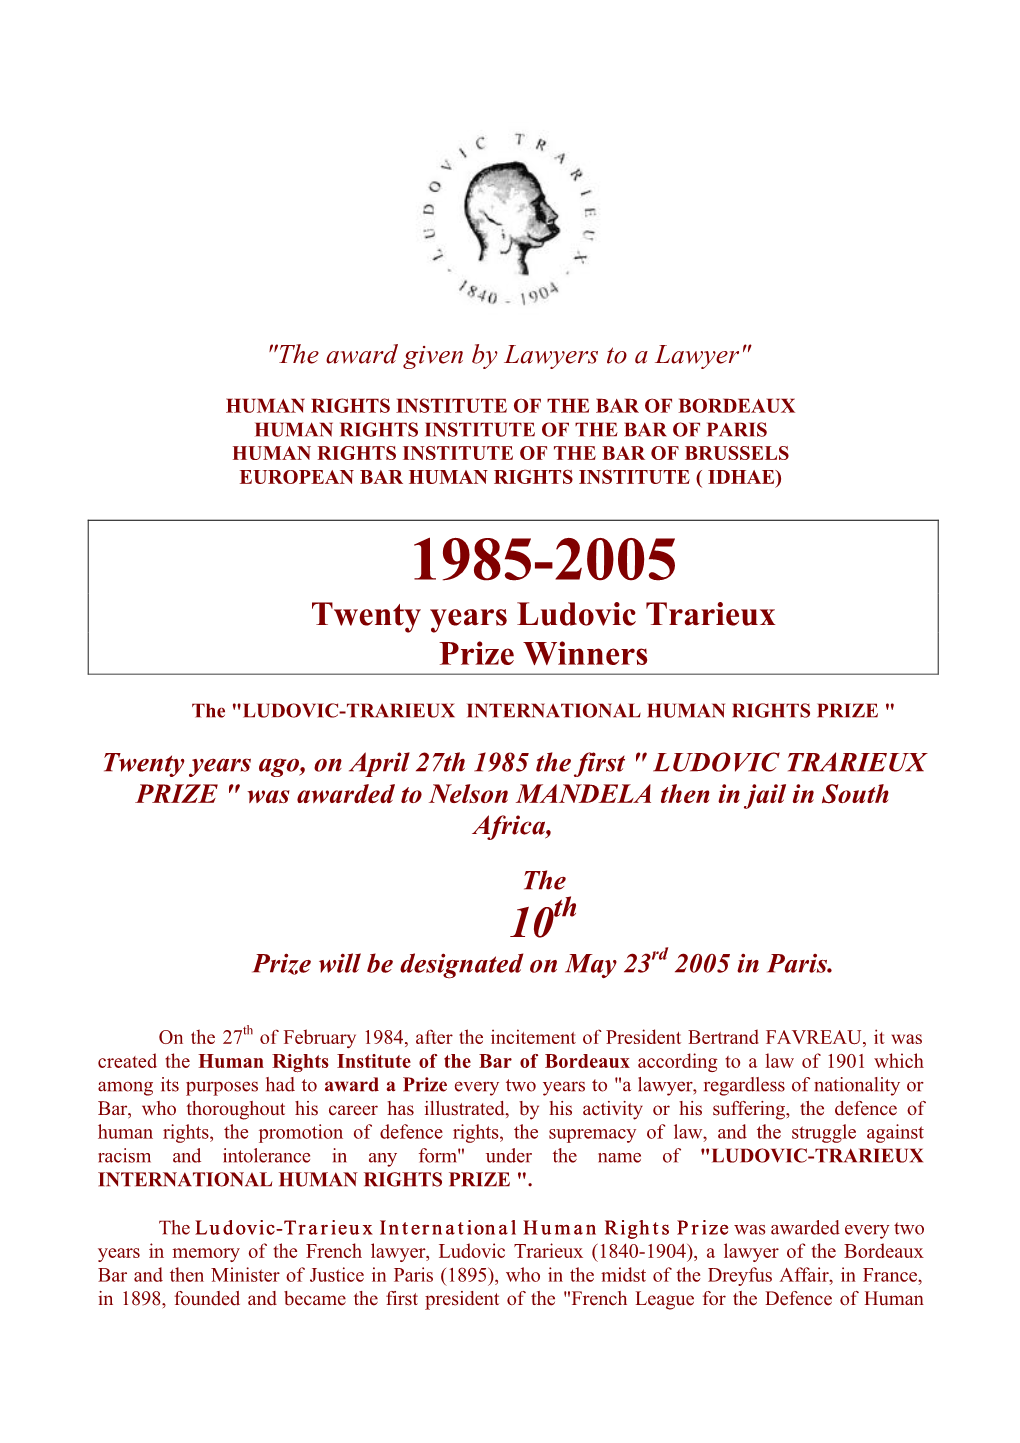 Twenty Years Ludovic Trarieux Prize Winners